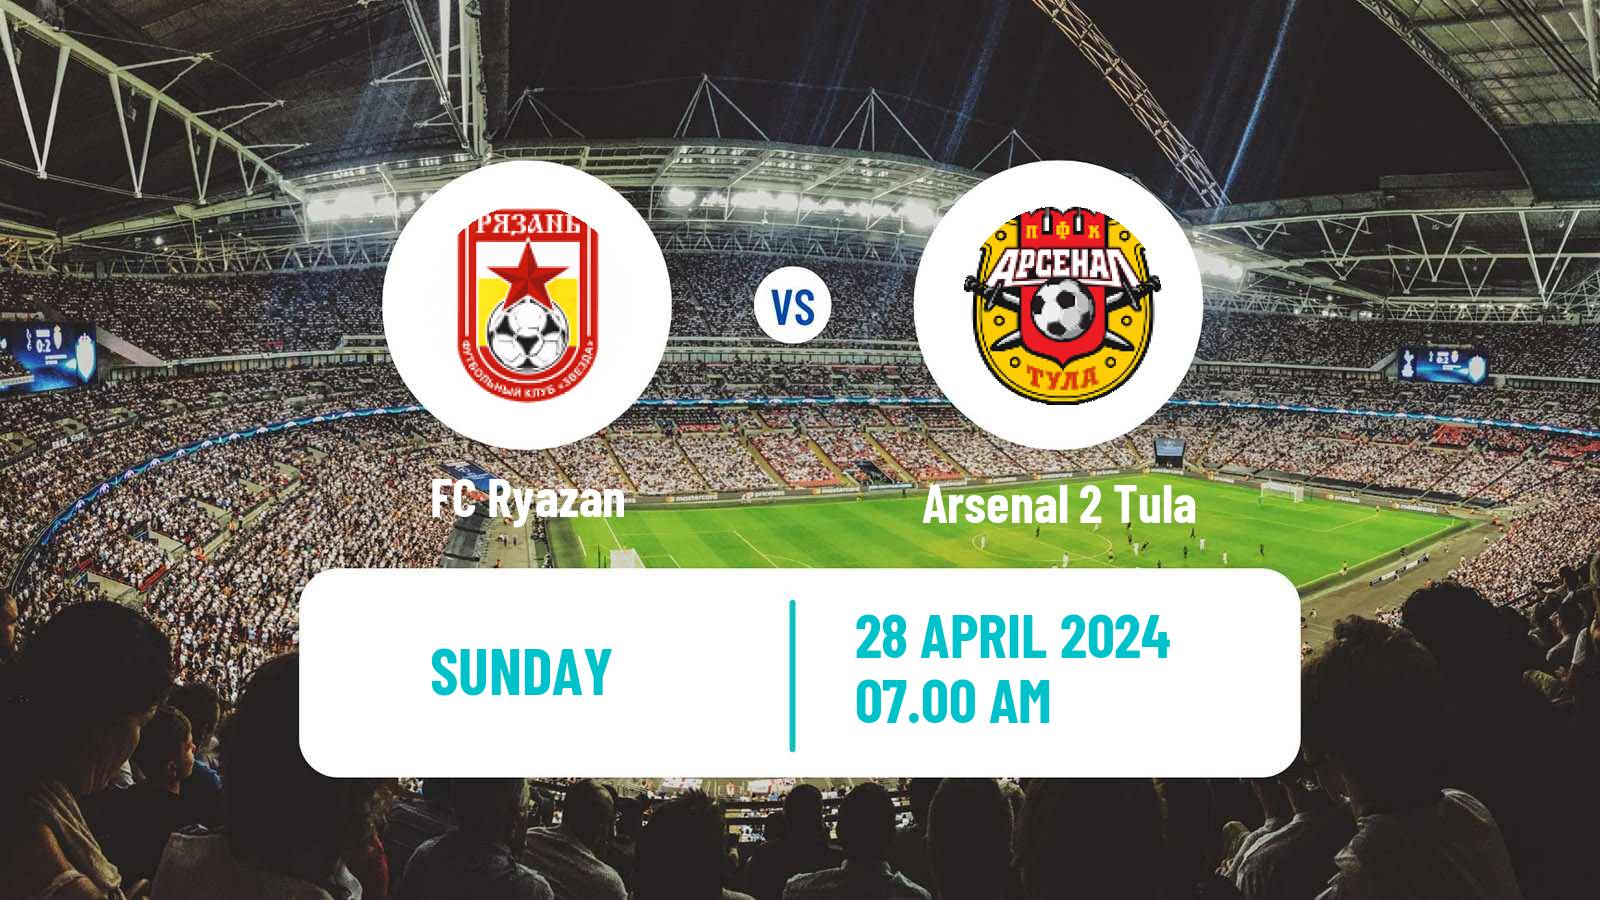 Soccer FNL 2 Division B Group 3 Ryazan - Arsenal 2 Tula